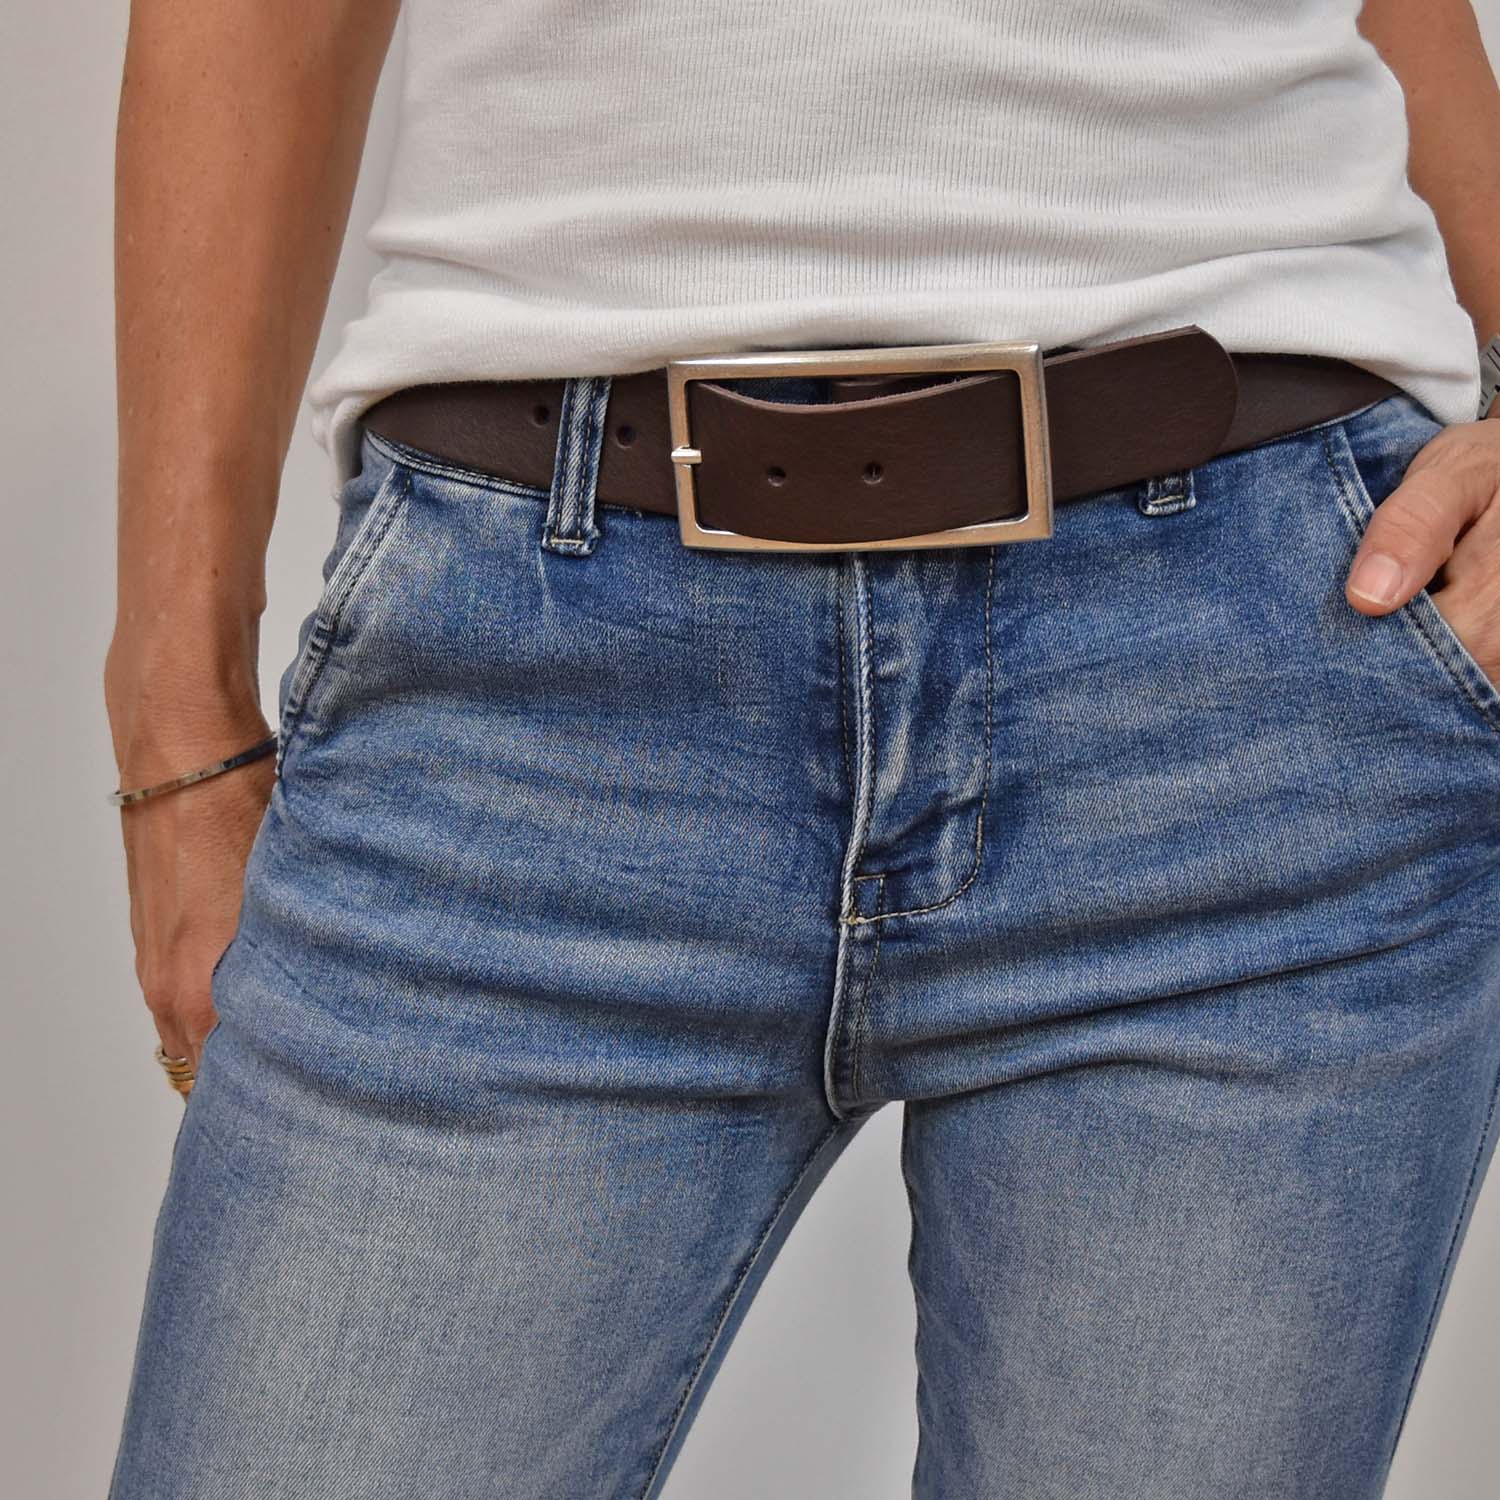 Brown rectangular buckle belt 